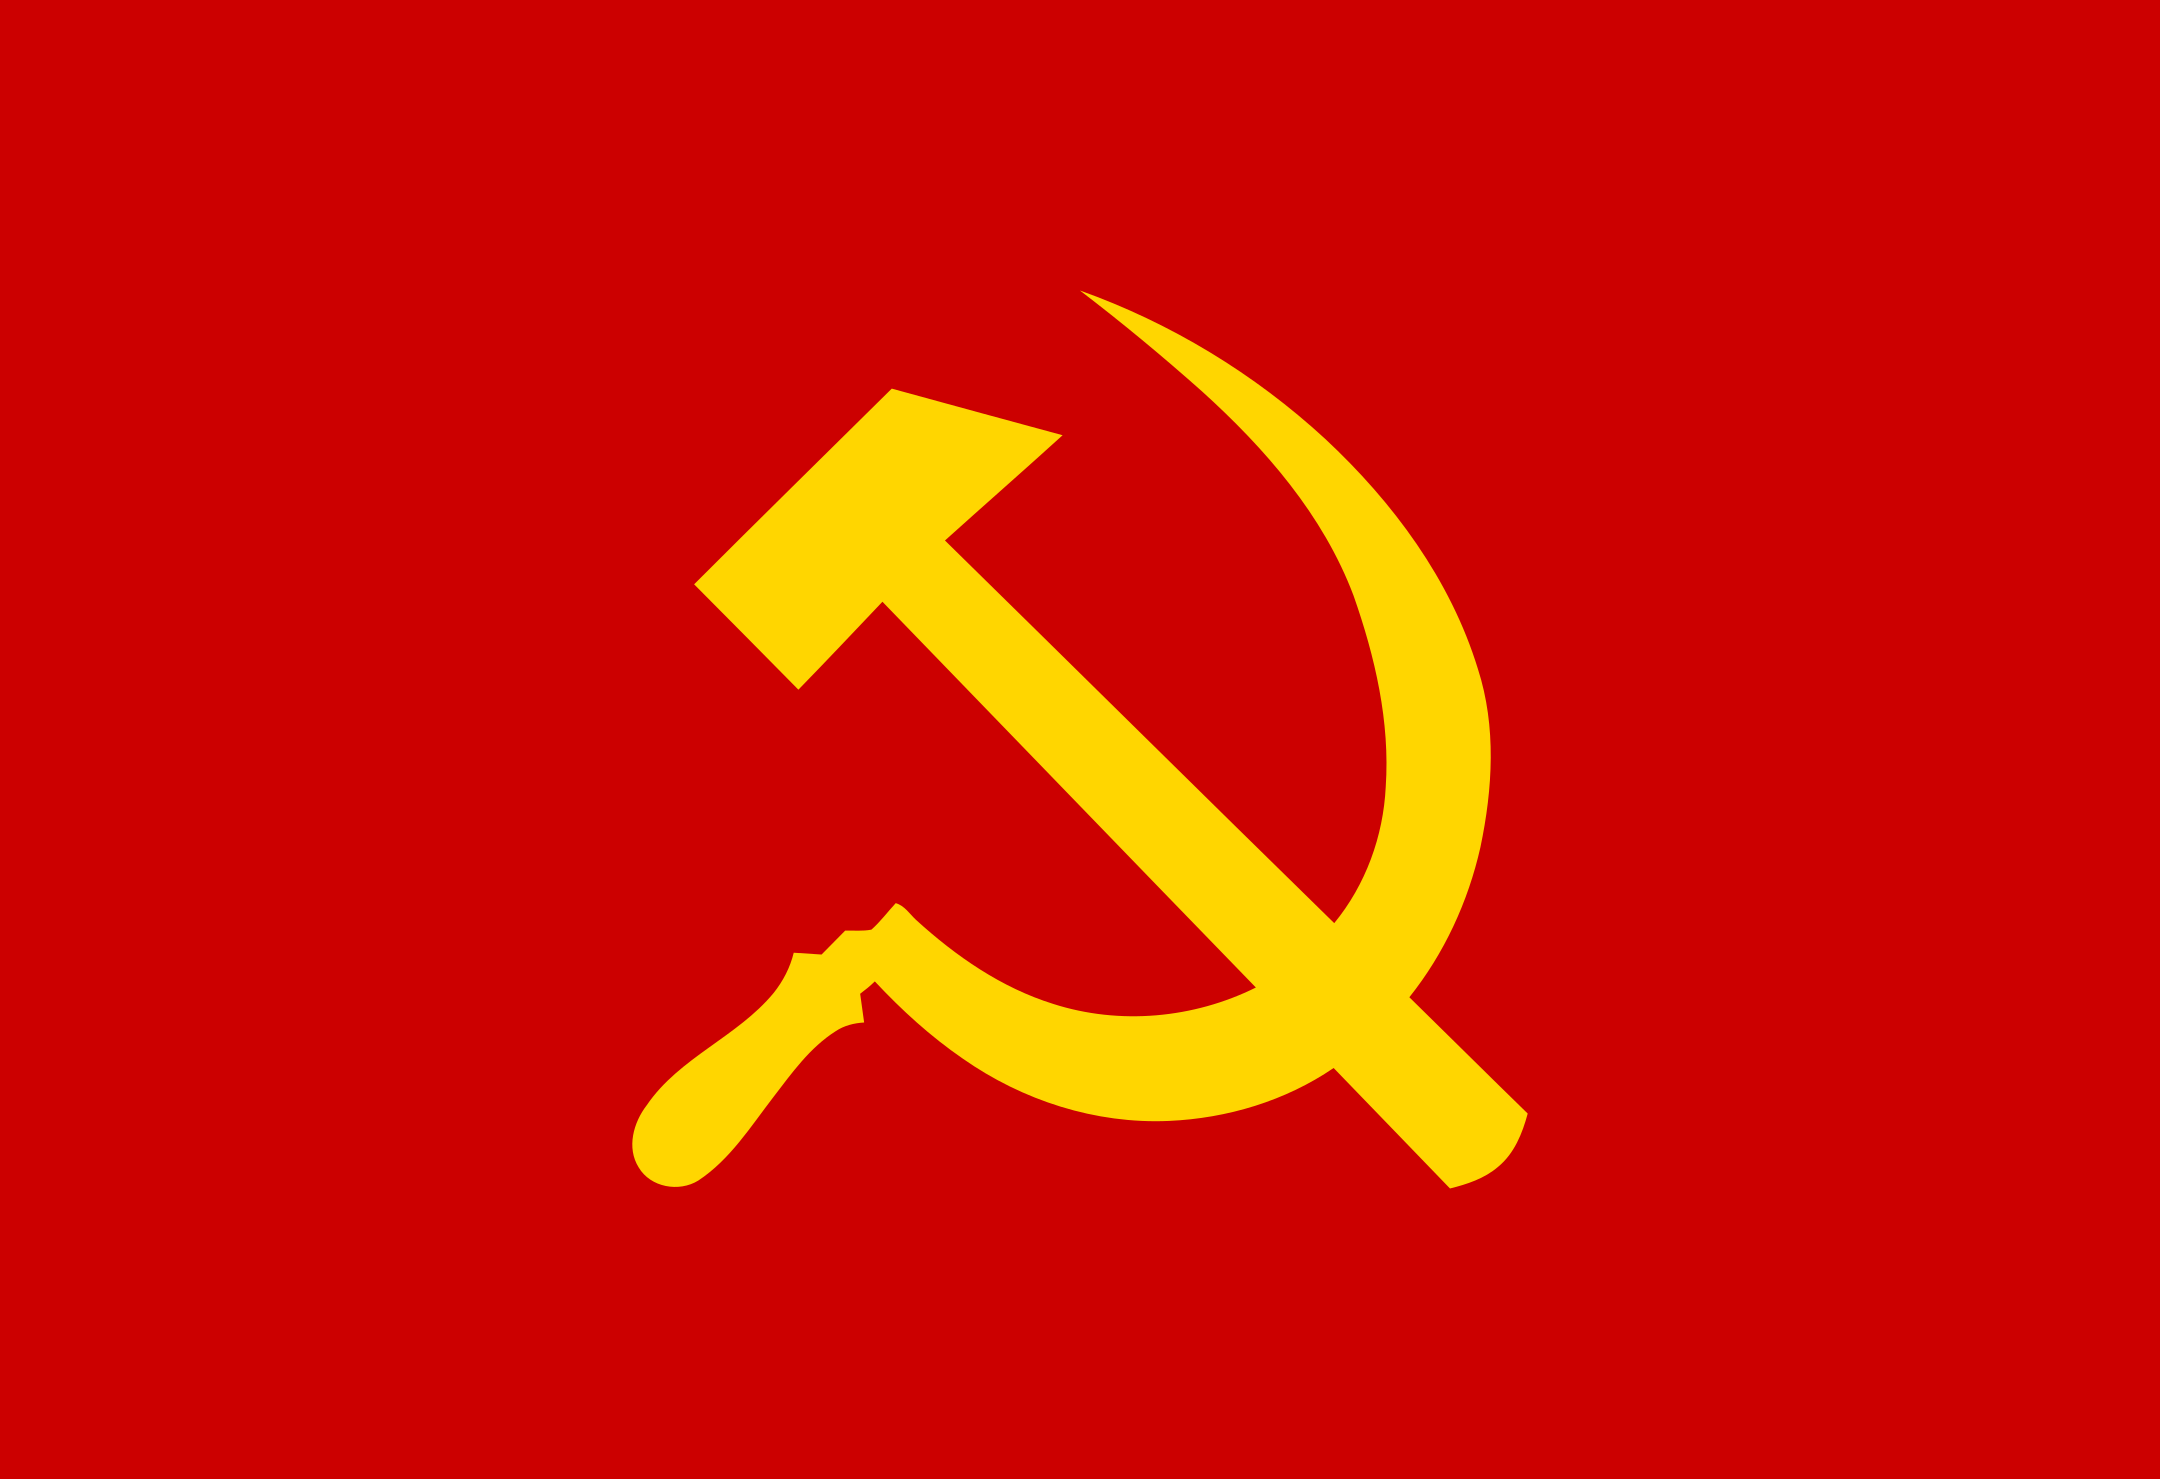 communism logo 1 - Communism Logo